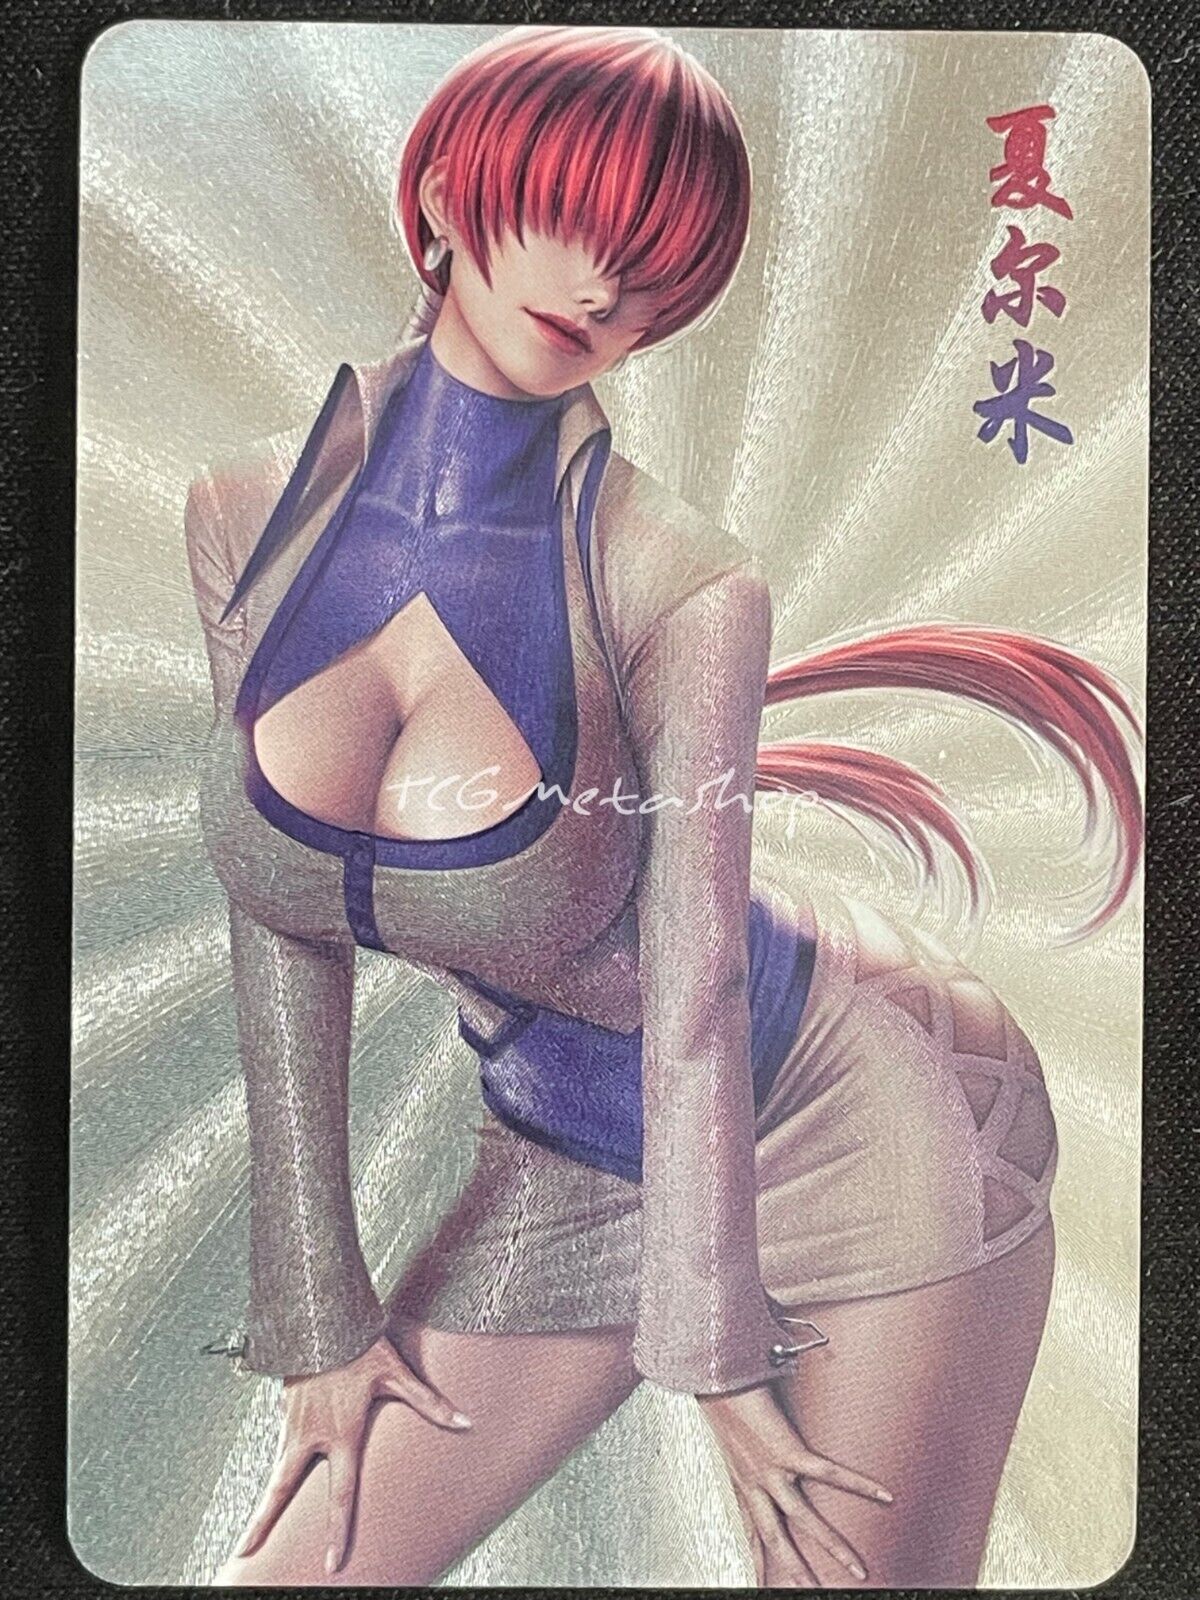 🔥 Shermie King of Fighters Goddess Story Anime Waifu Card ACG DUAL 1208 🔥